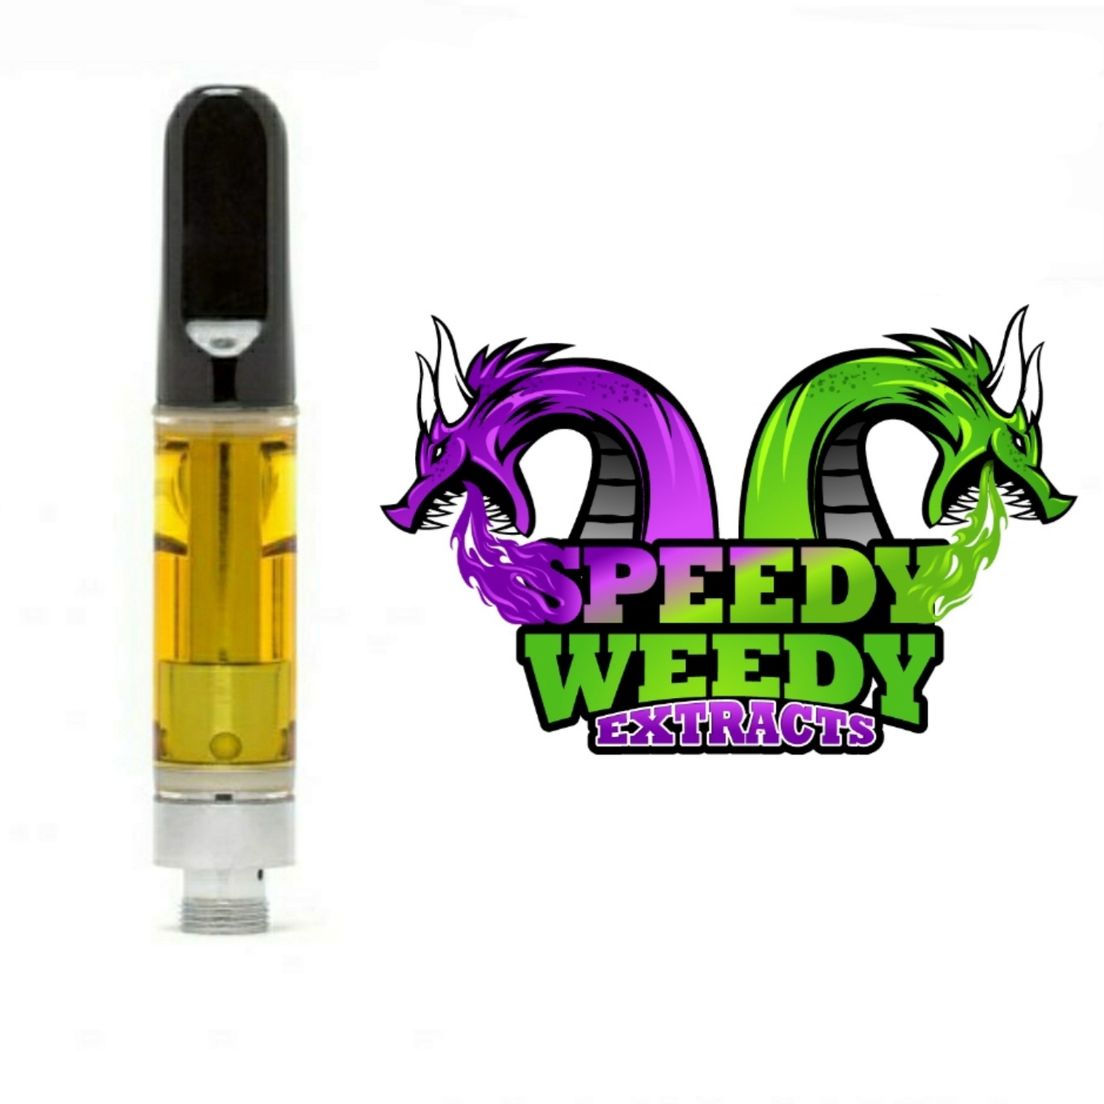 1. Speedy Weedy 1g Cartridge - Northern Lights - 3/$60 Mix/Match